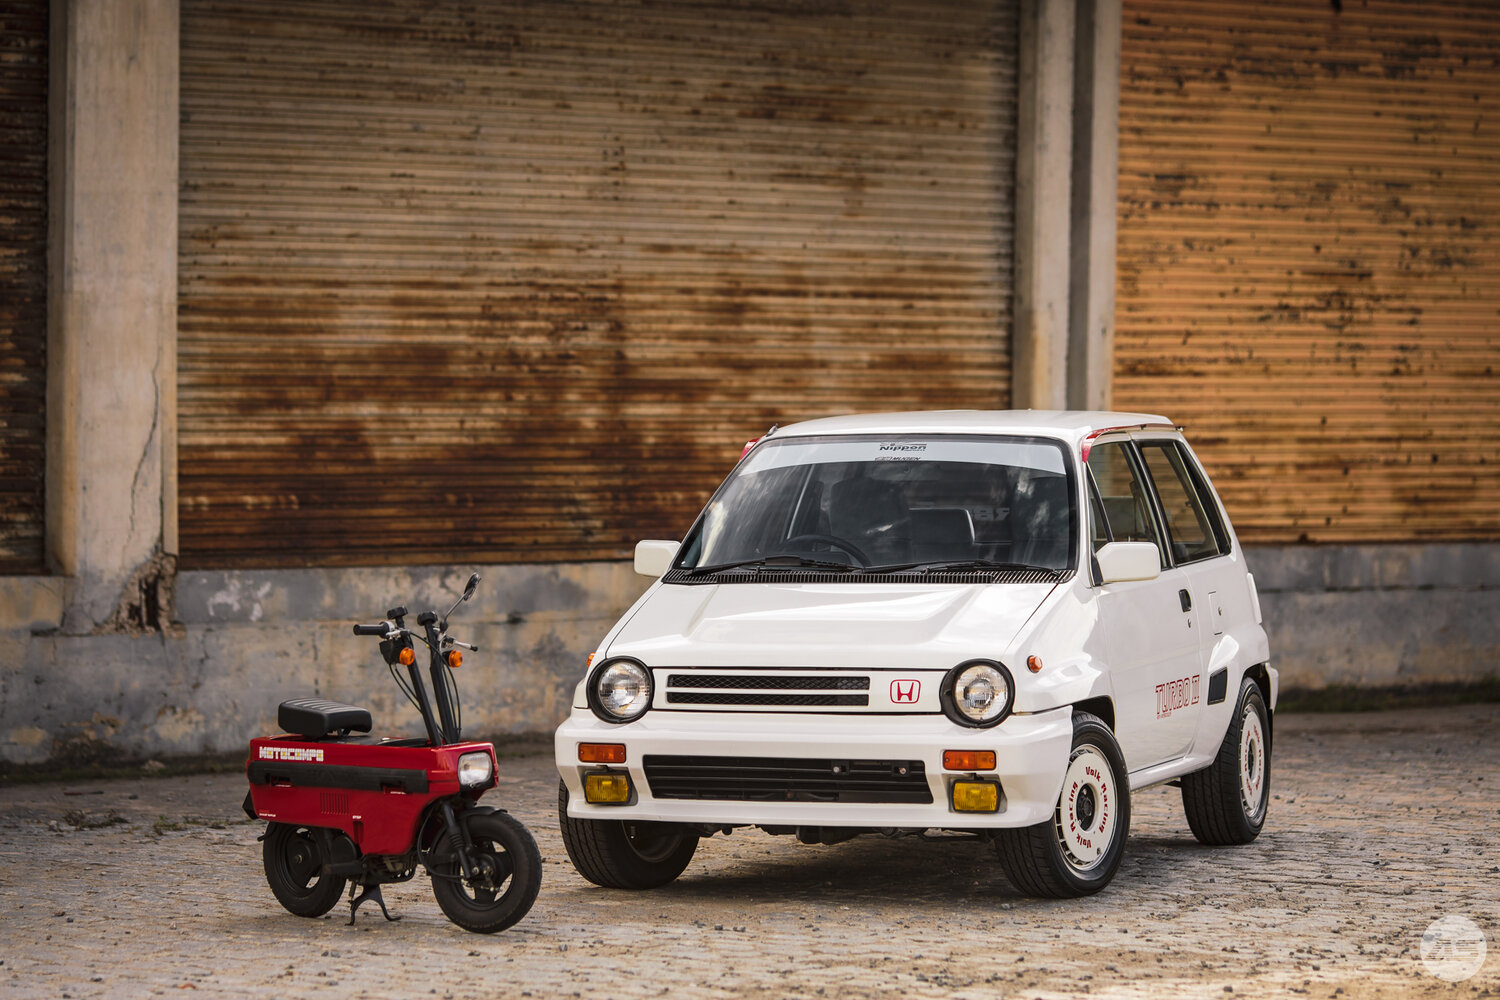 Nippon Imports Honda City Turbo Ii And Motocompo Average Squad